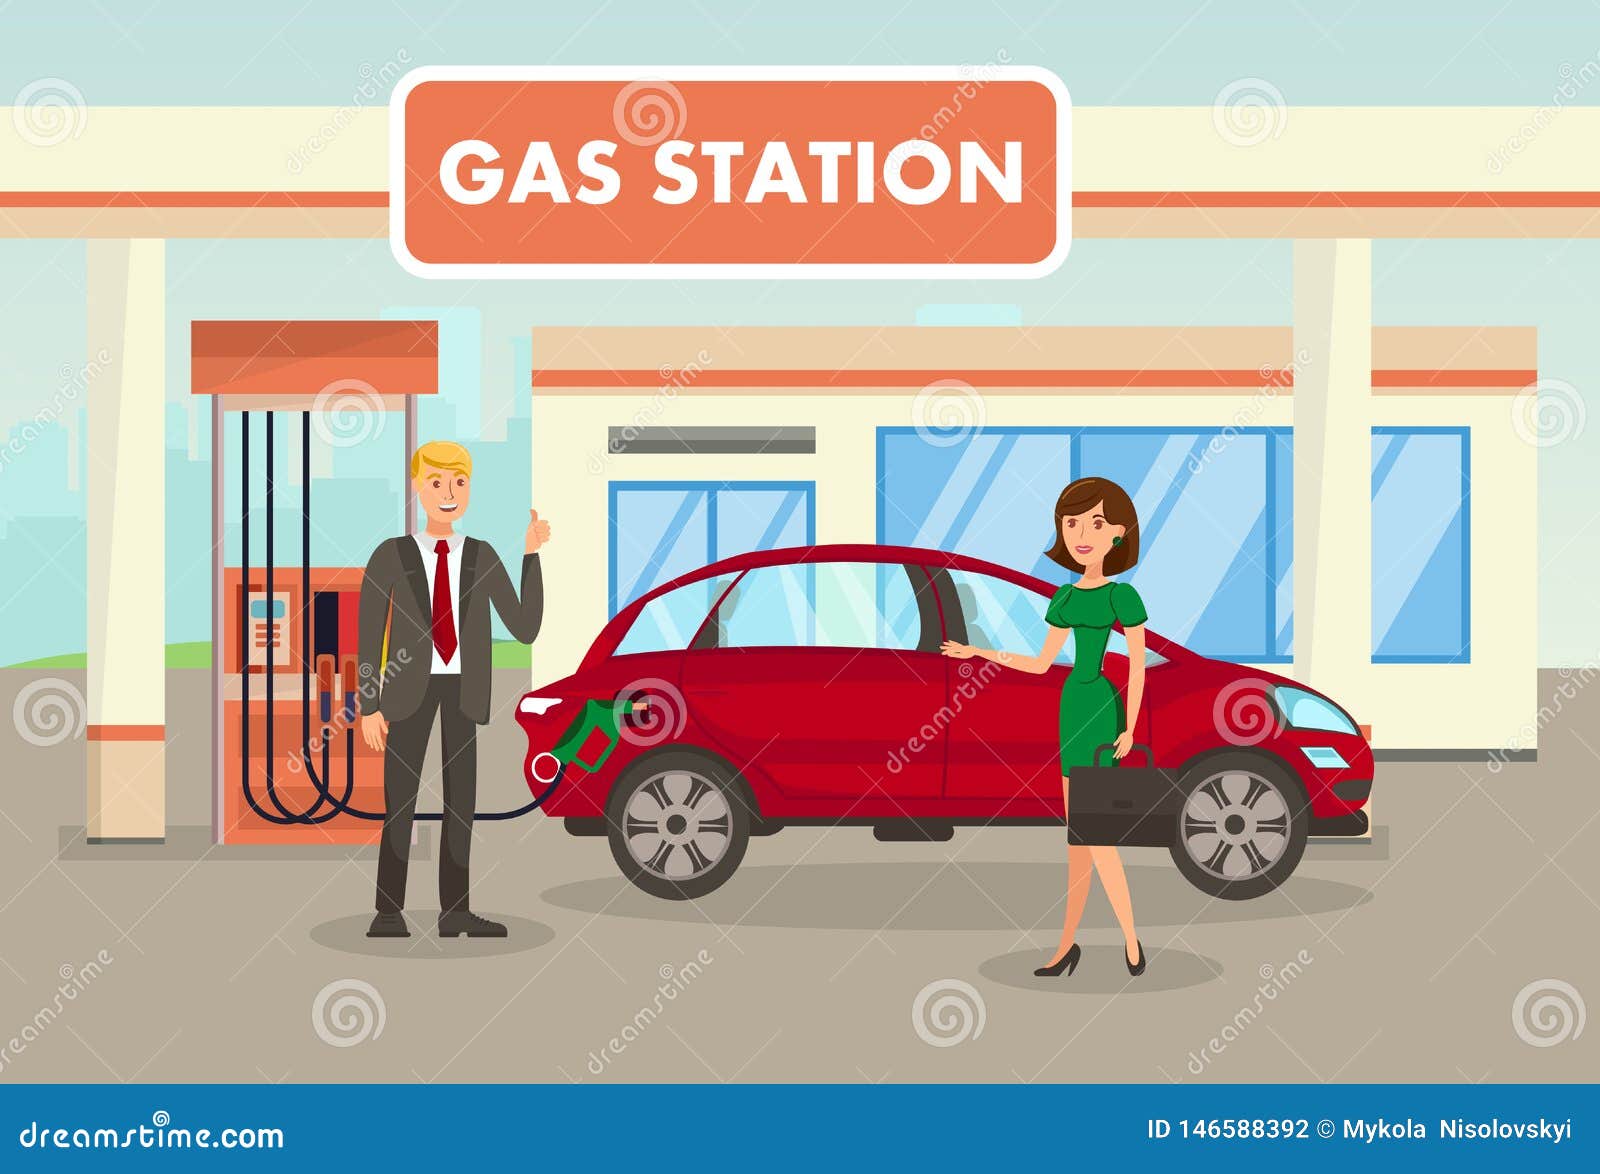 petrol, filling, gas station  